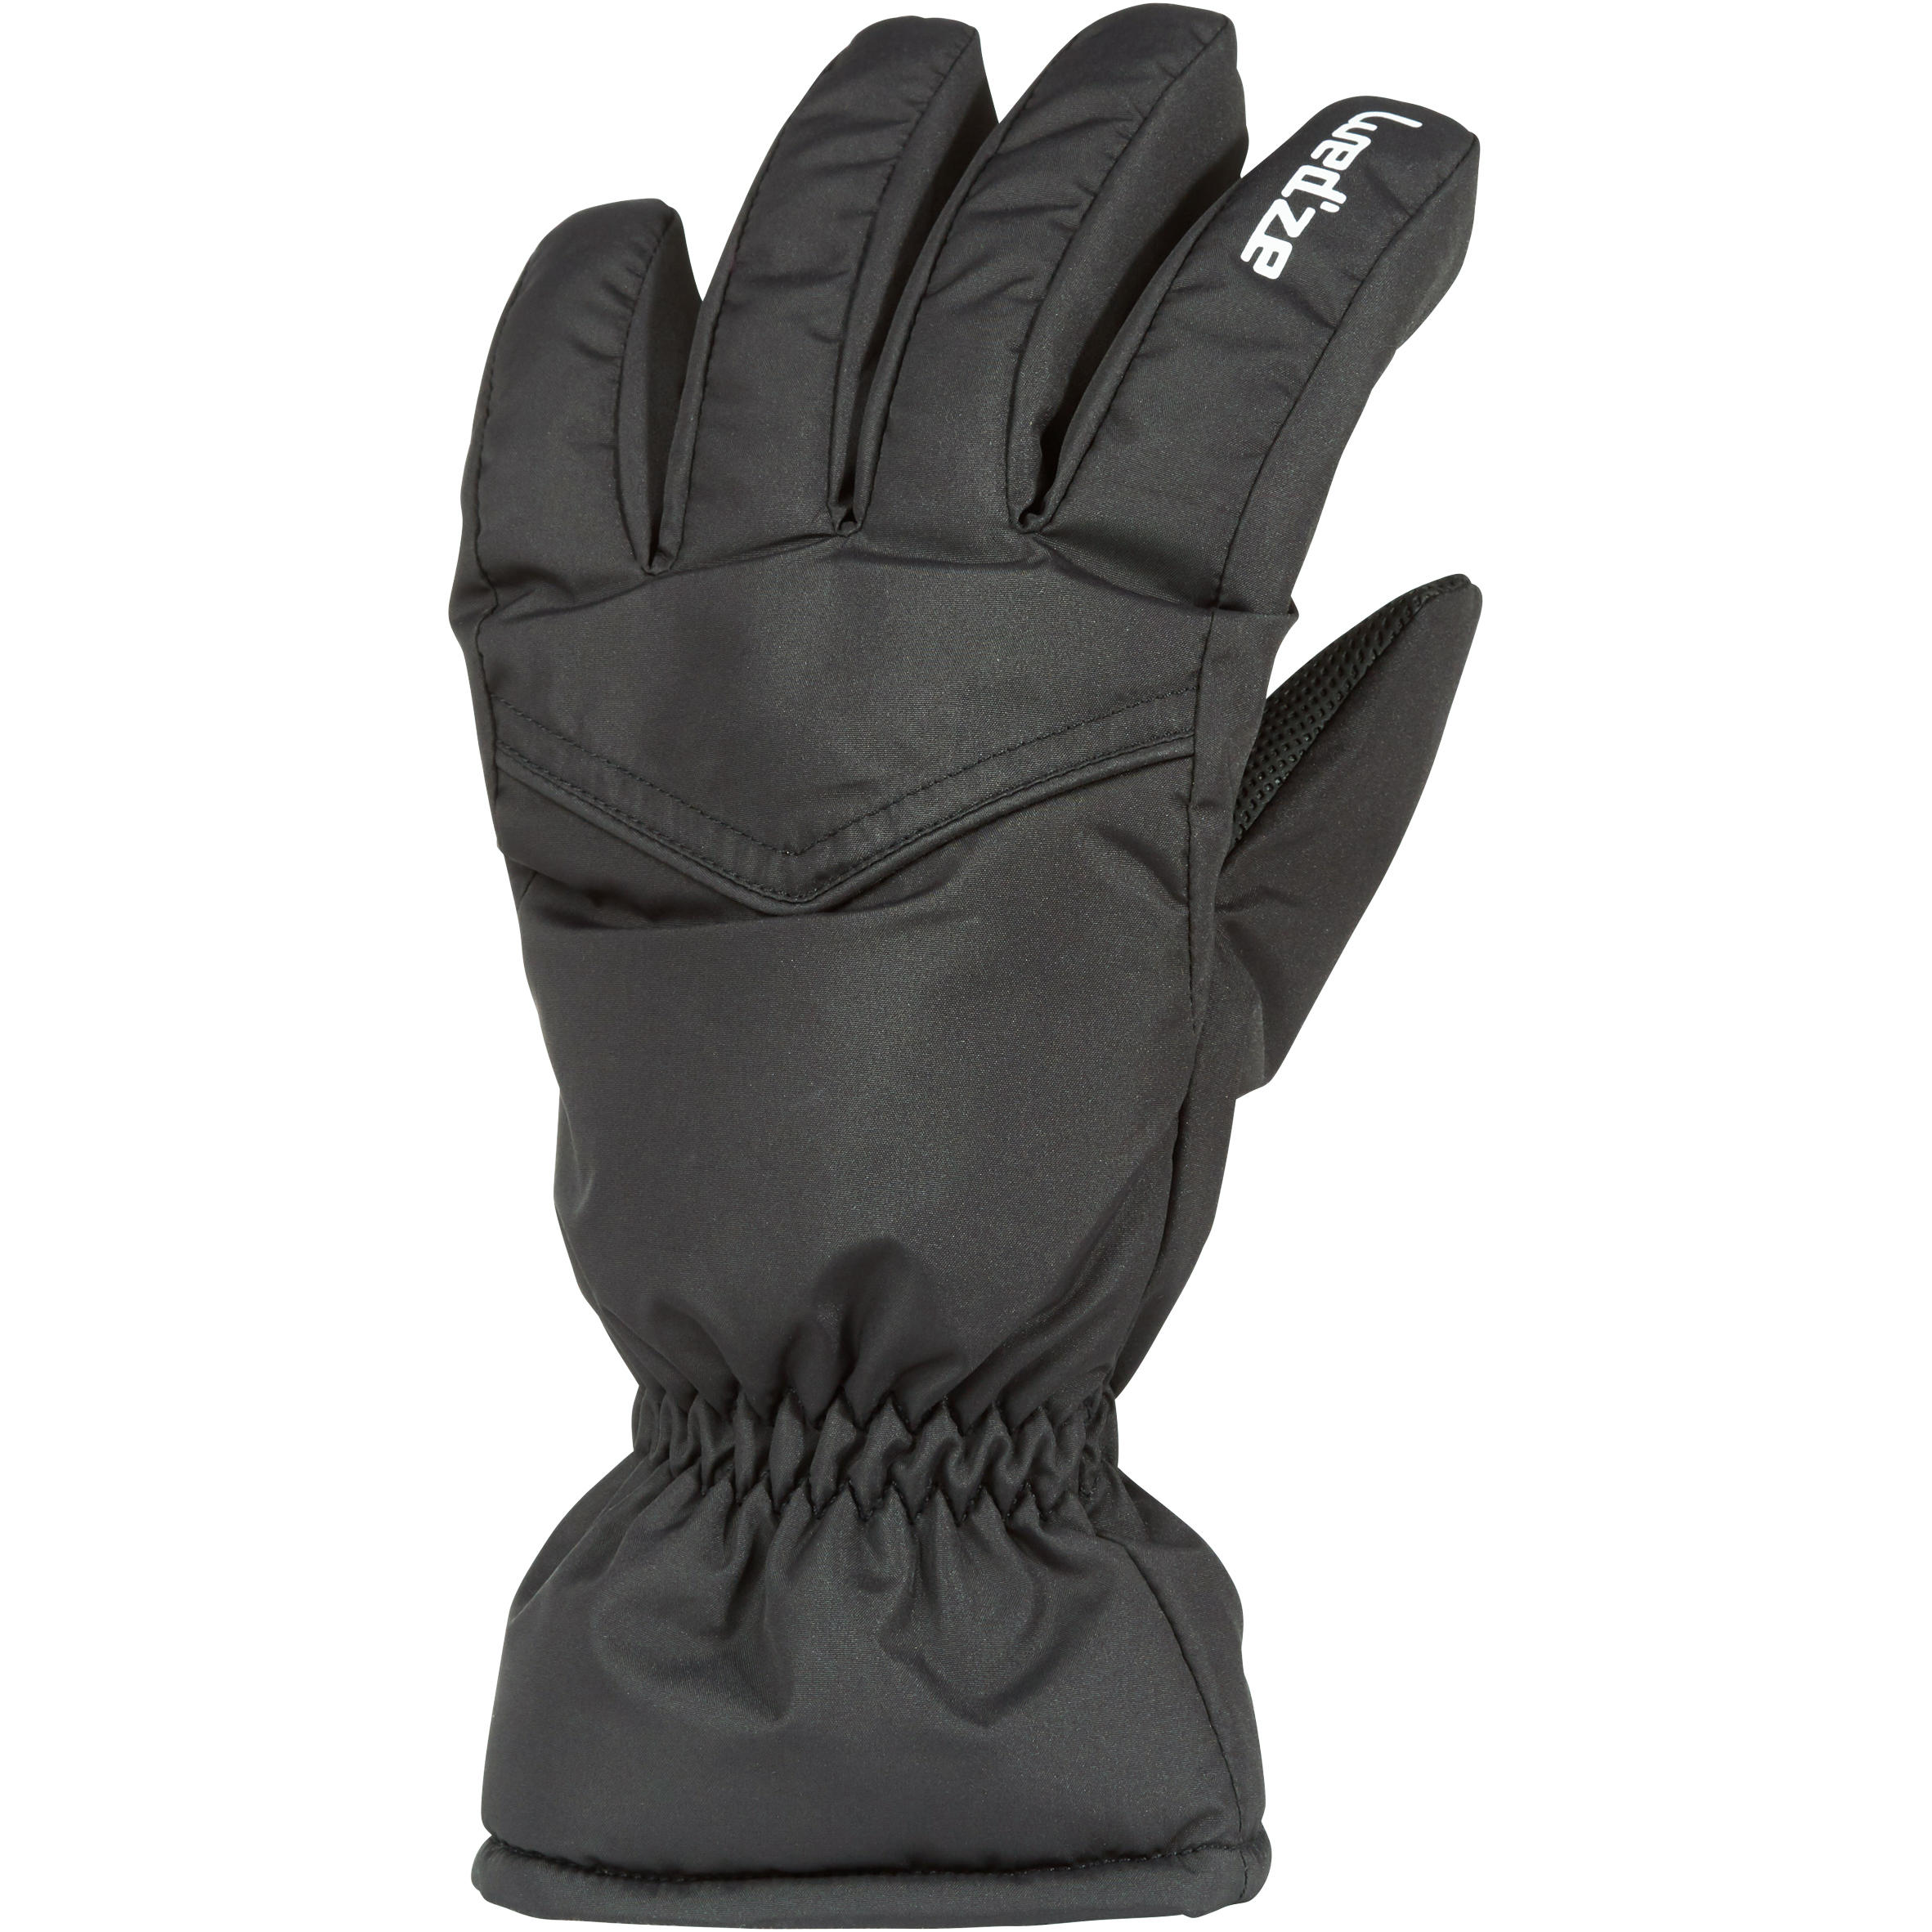 Snow Gloves - Buy Ski/Warm Gloves 